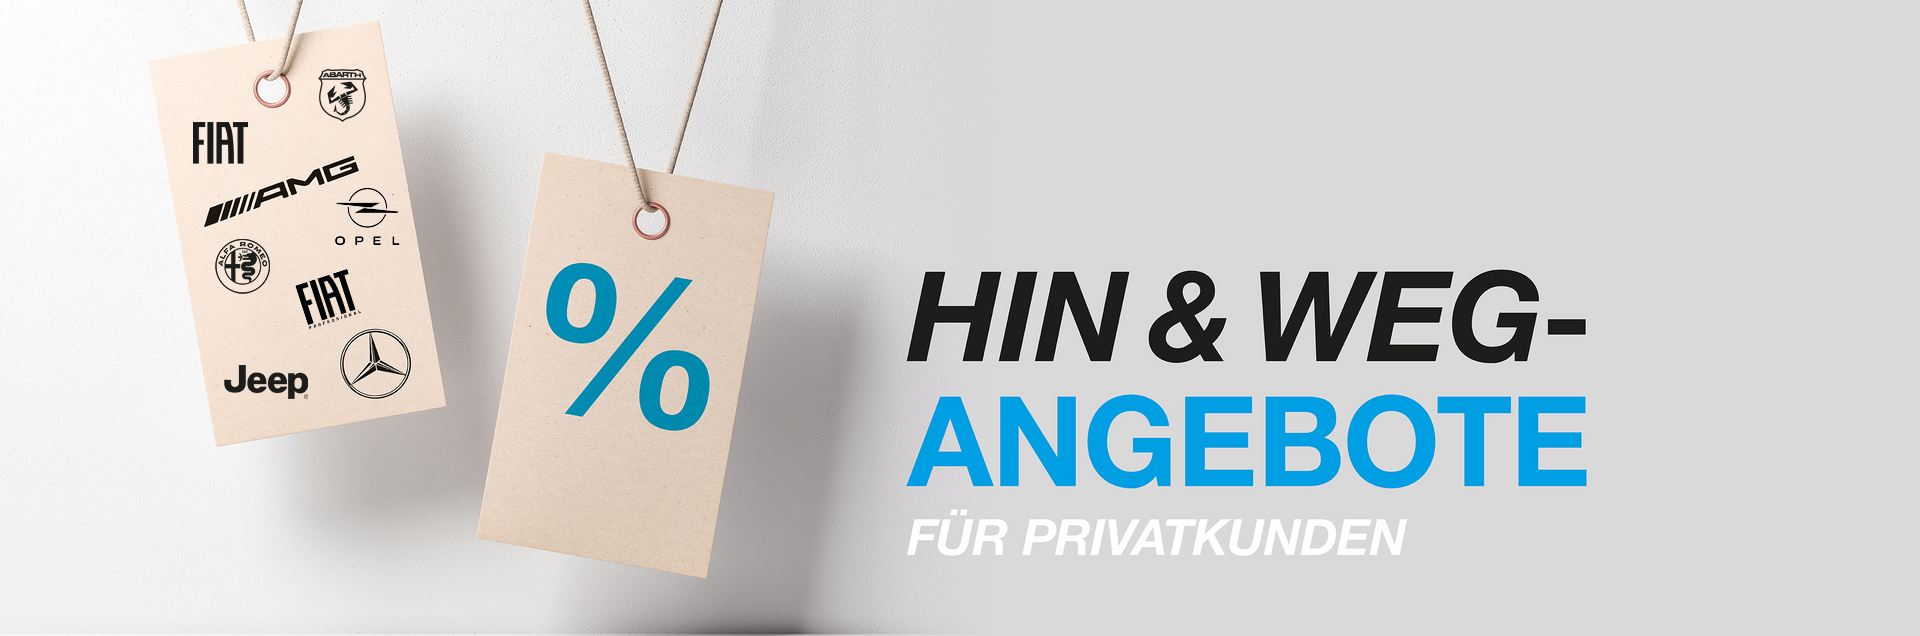 Hin & Weg-Angebote Privatkunden RKG